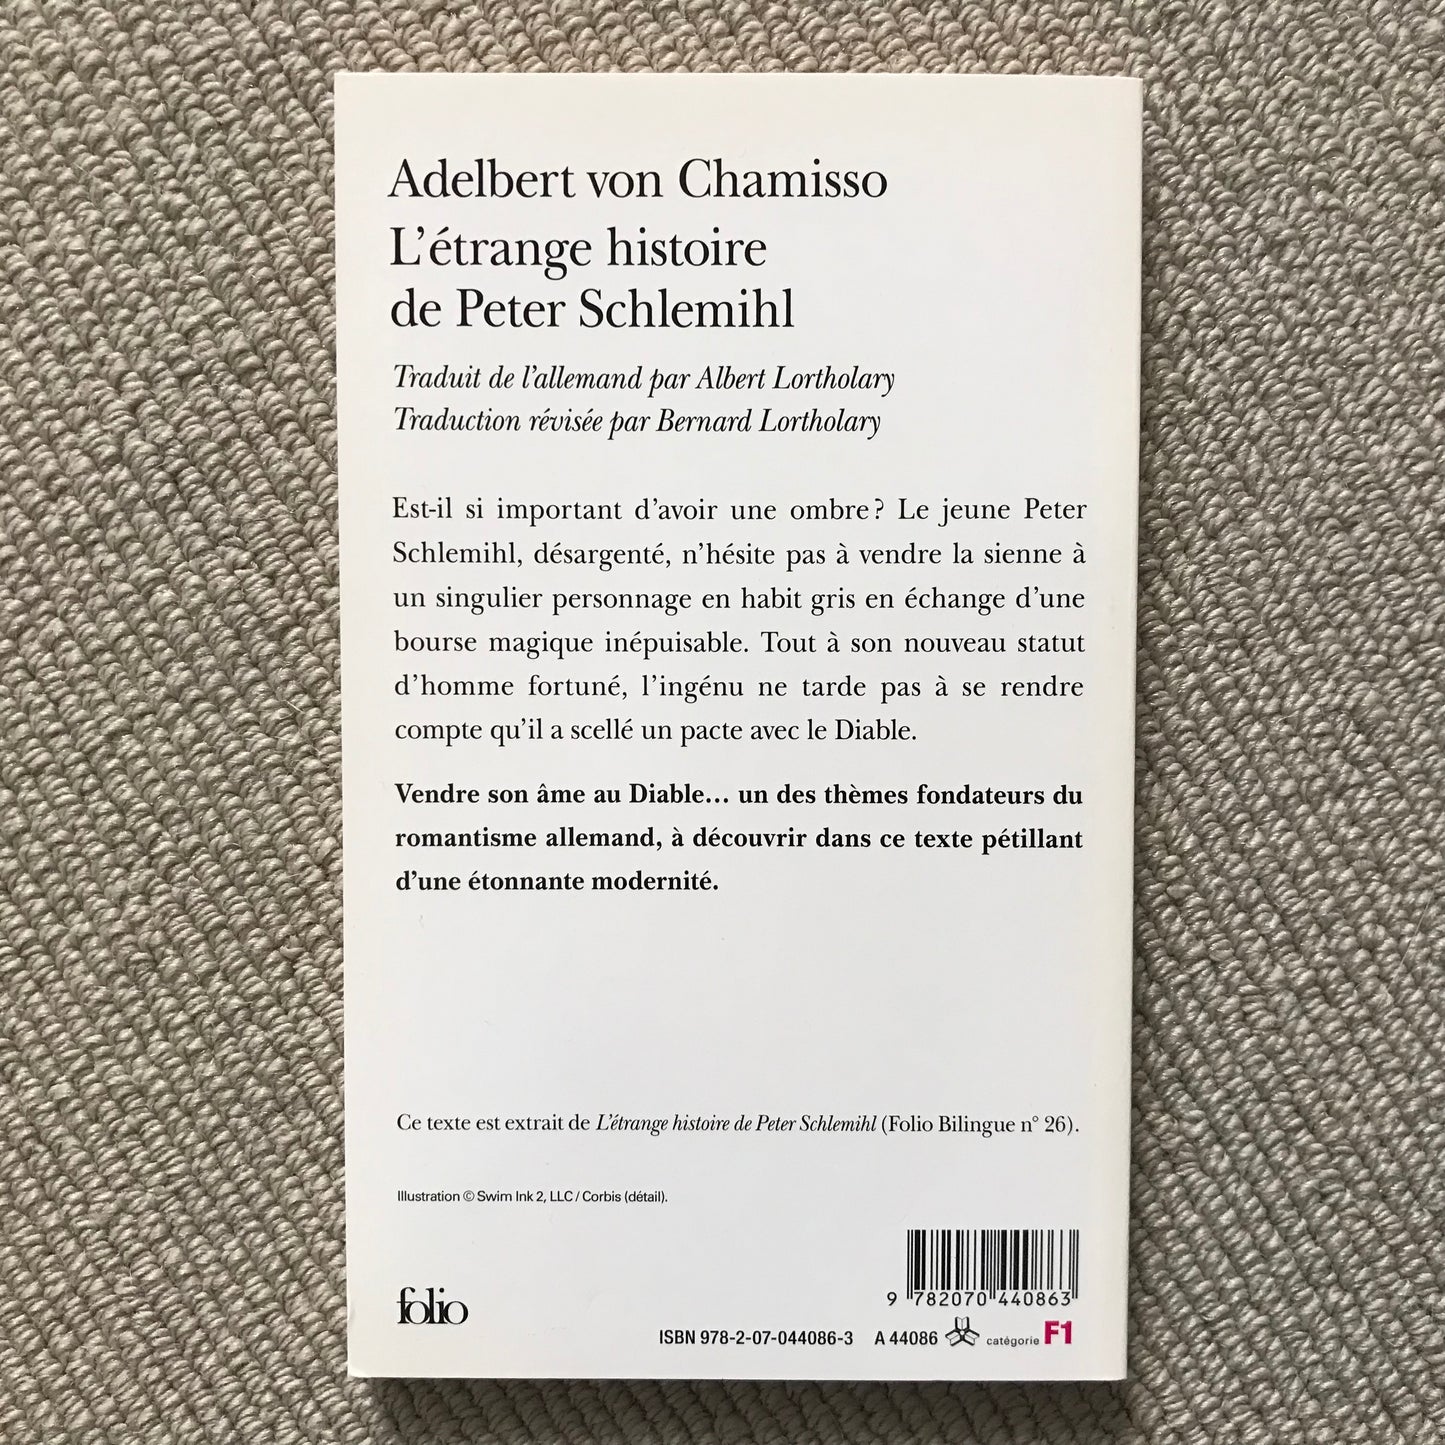 Chamisso von, Adelbert - L’étrange histoire de Peter Schlemihl